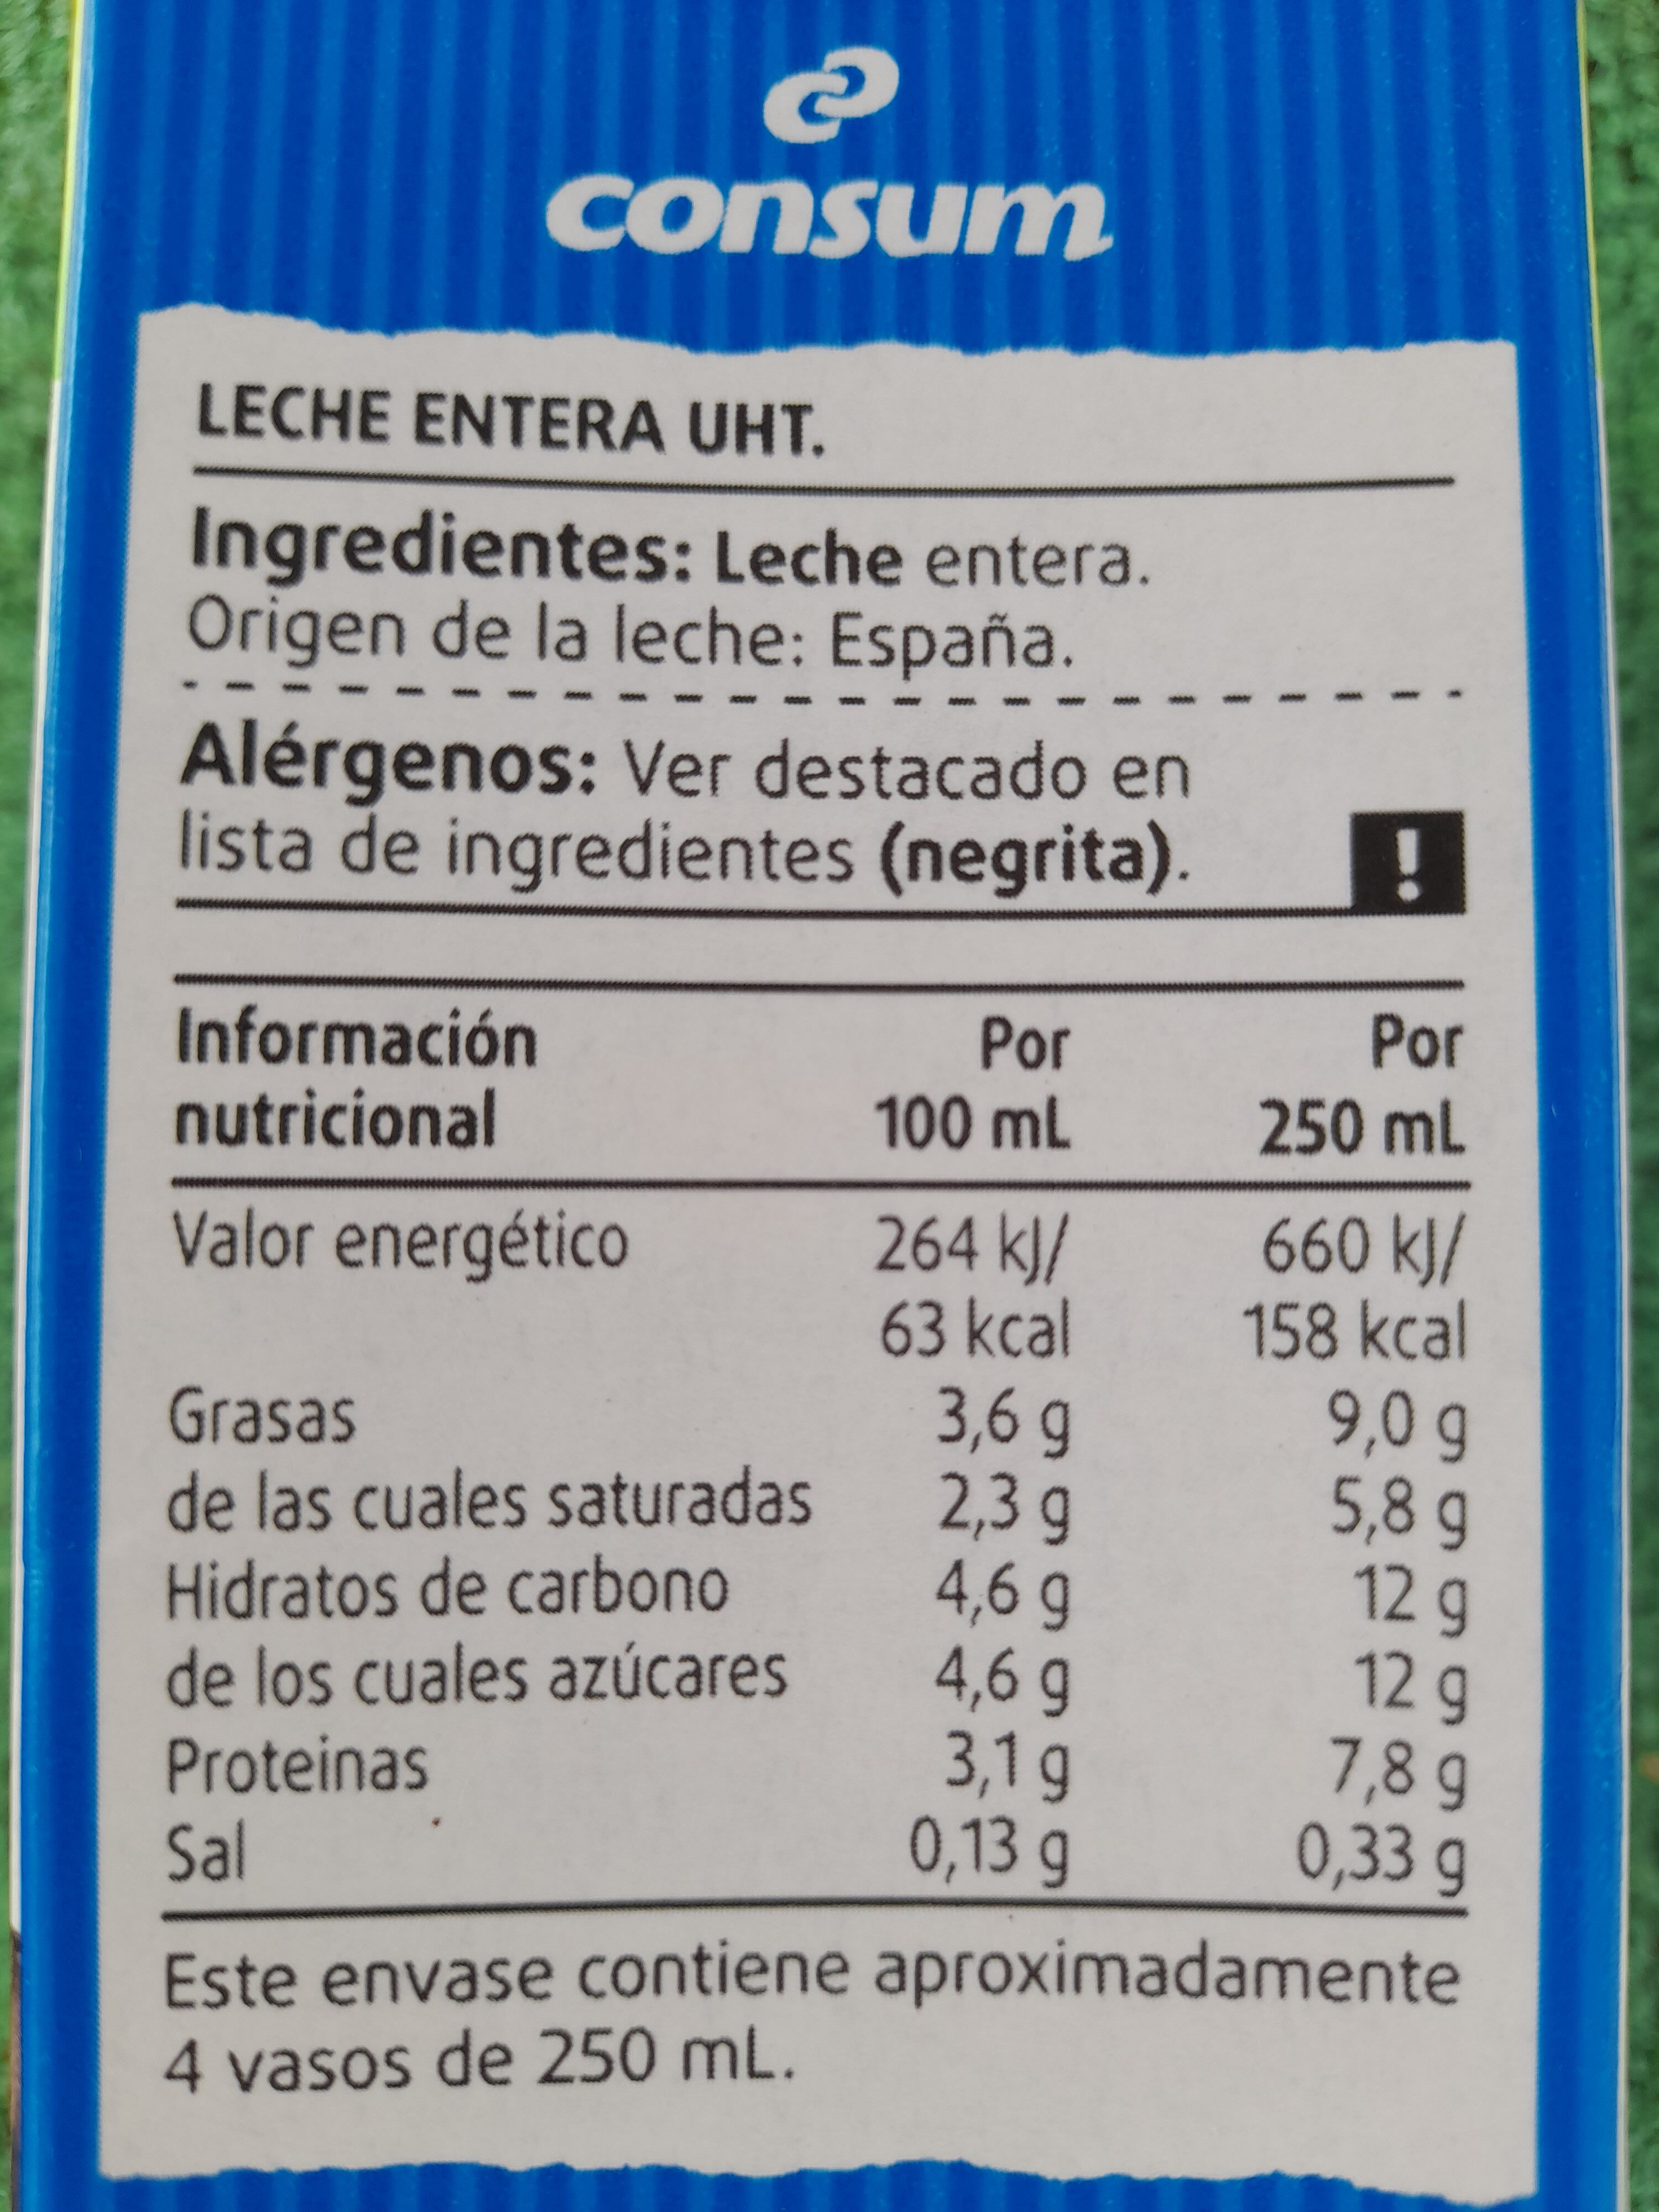 Leche entera - Ingredients - es